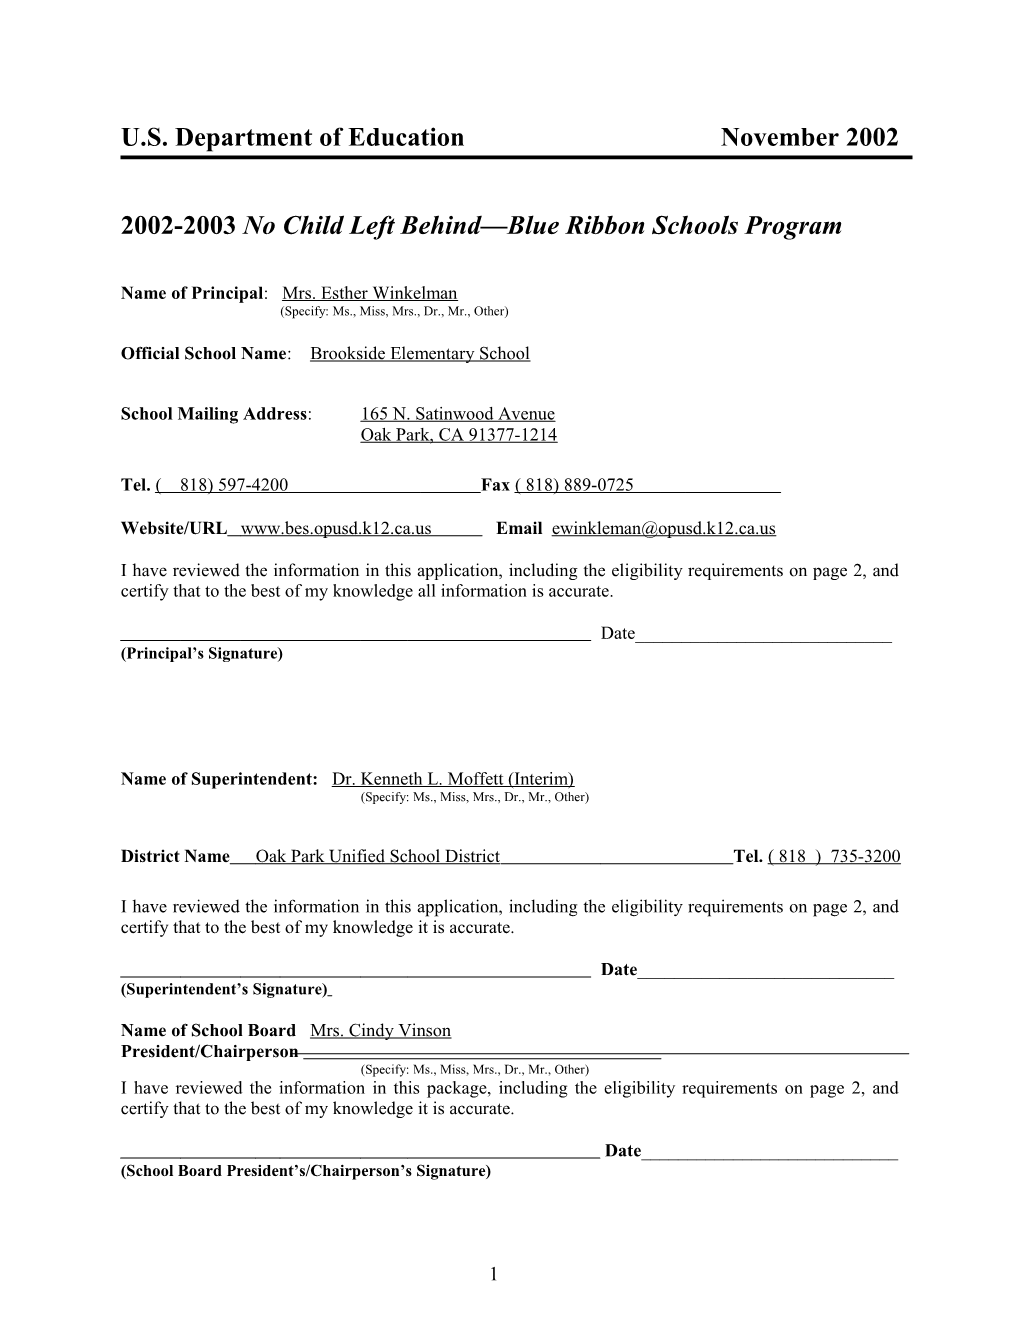 Brookside Elementary School 2003 No Child Left Behind-Blue Ribbon School (Msword)